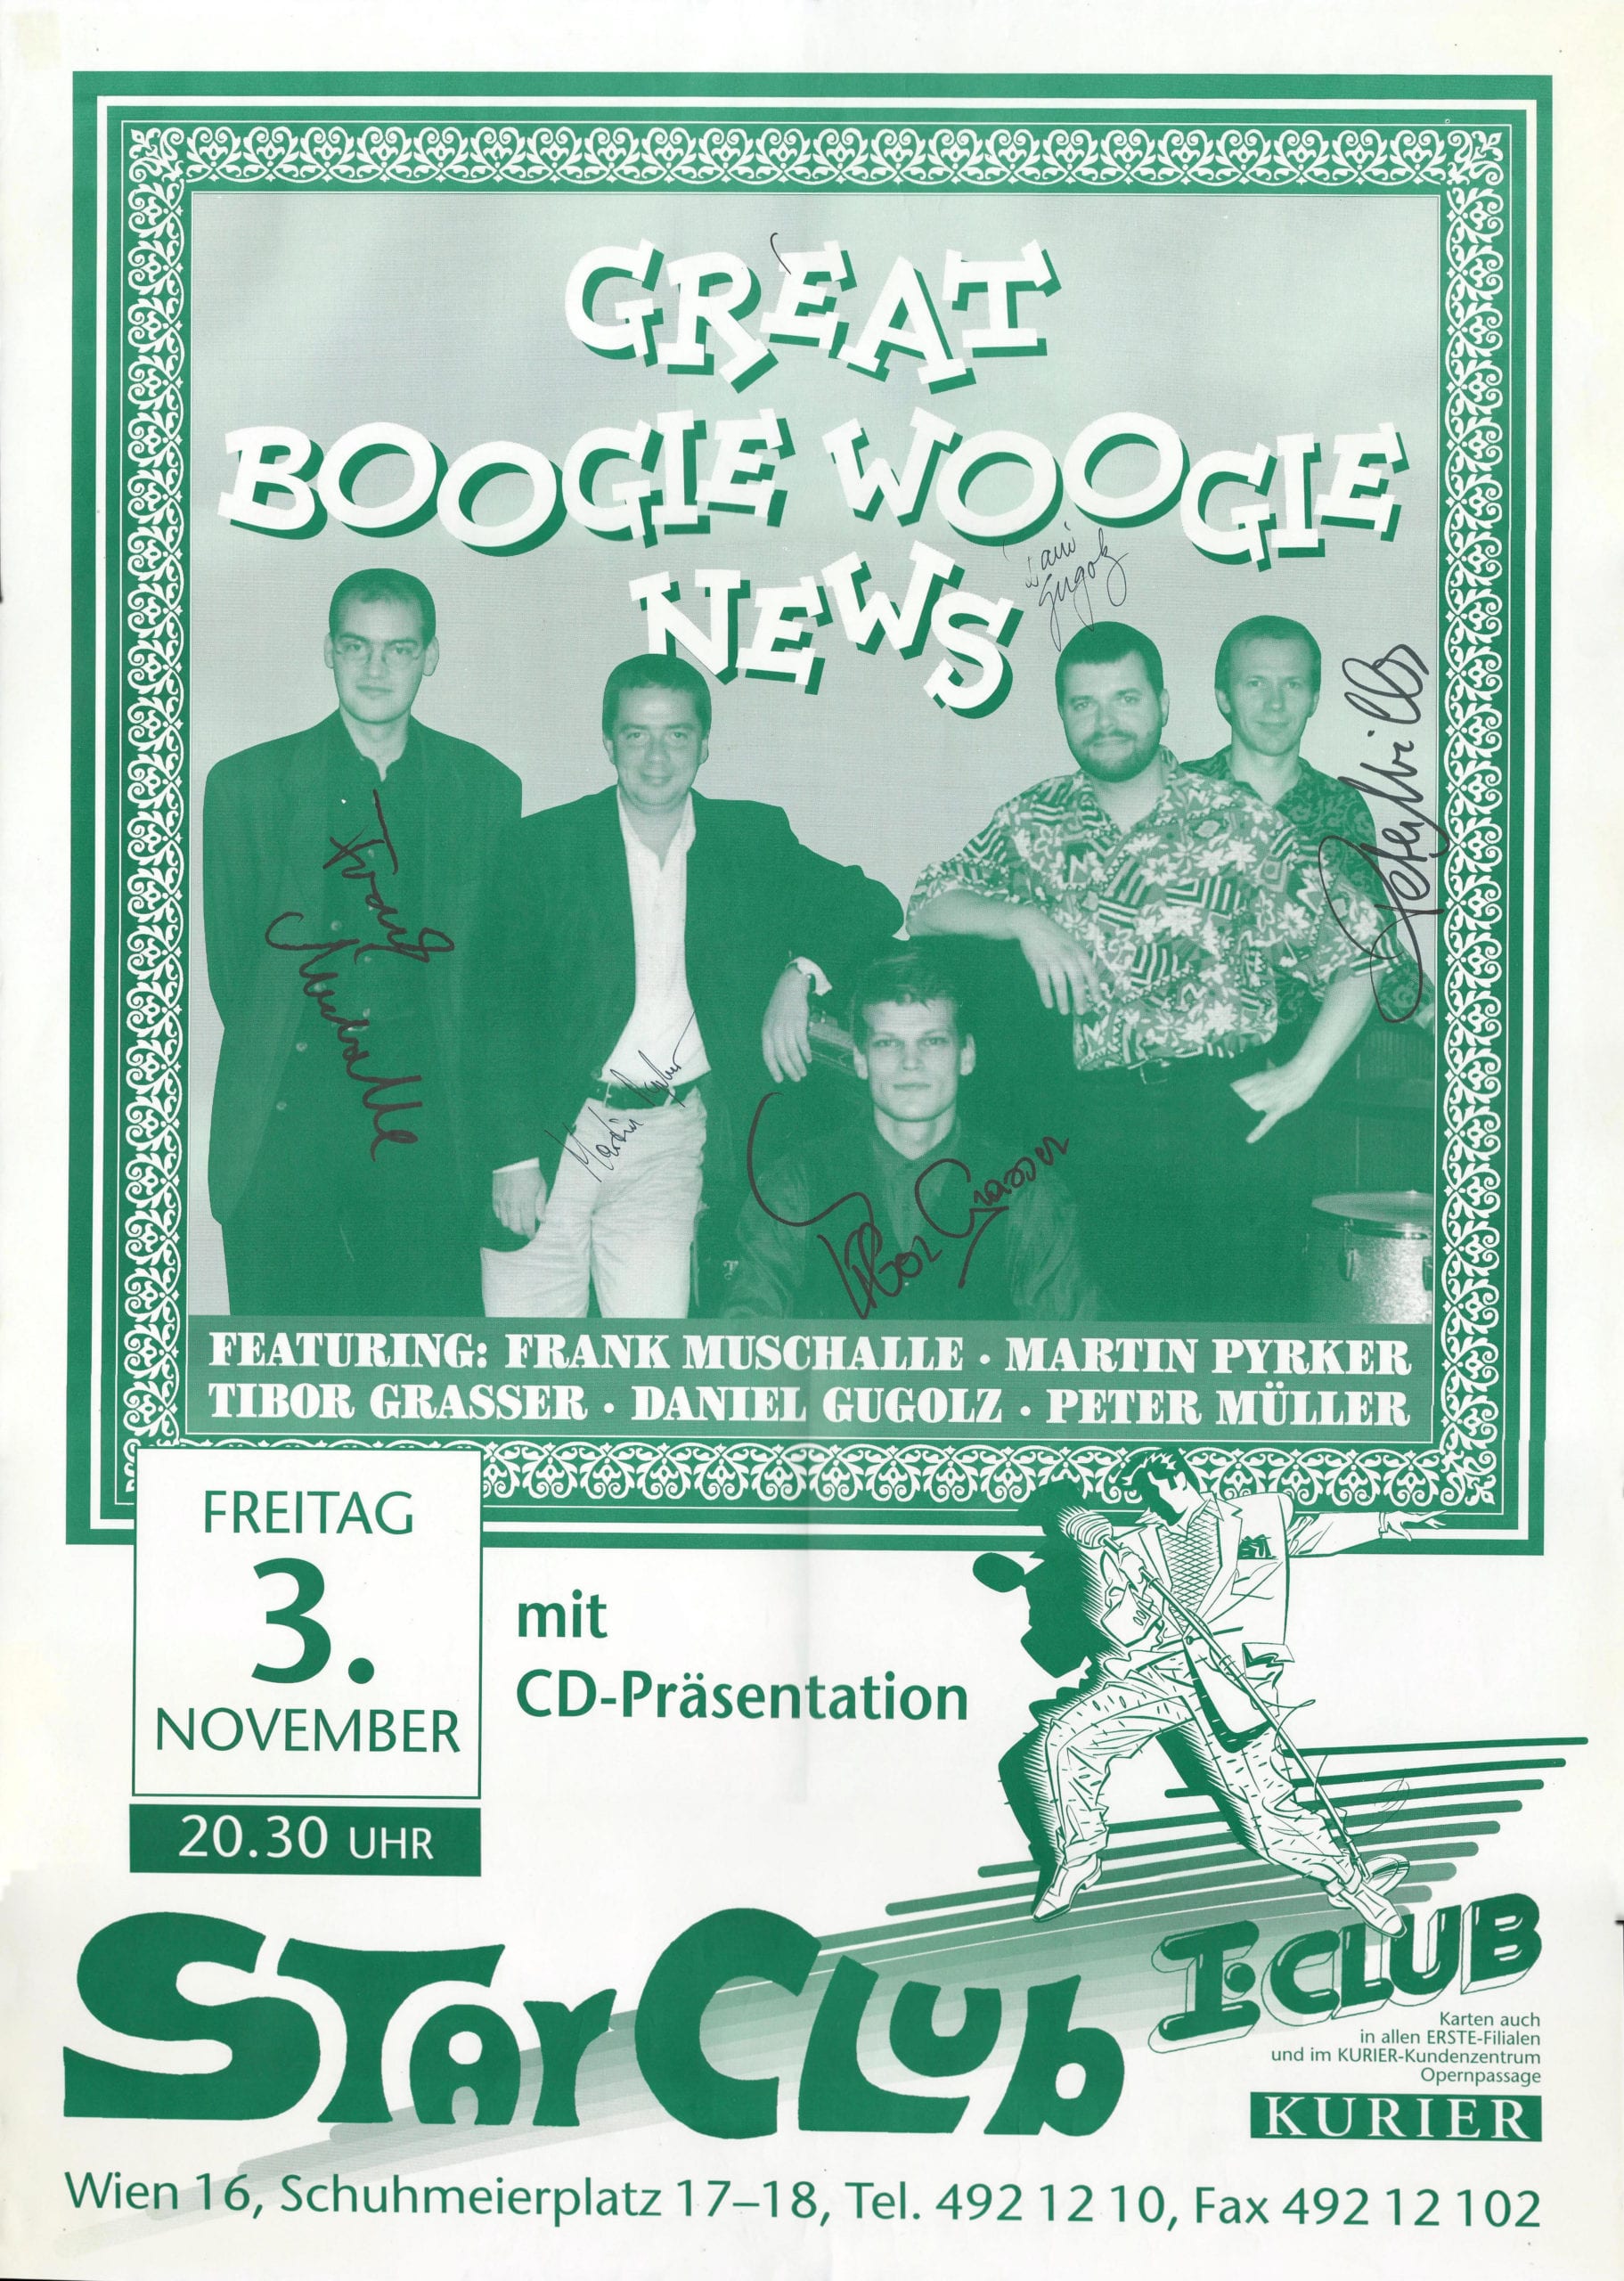 Boogie News – 1 (59×84 cm)